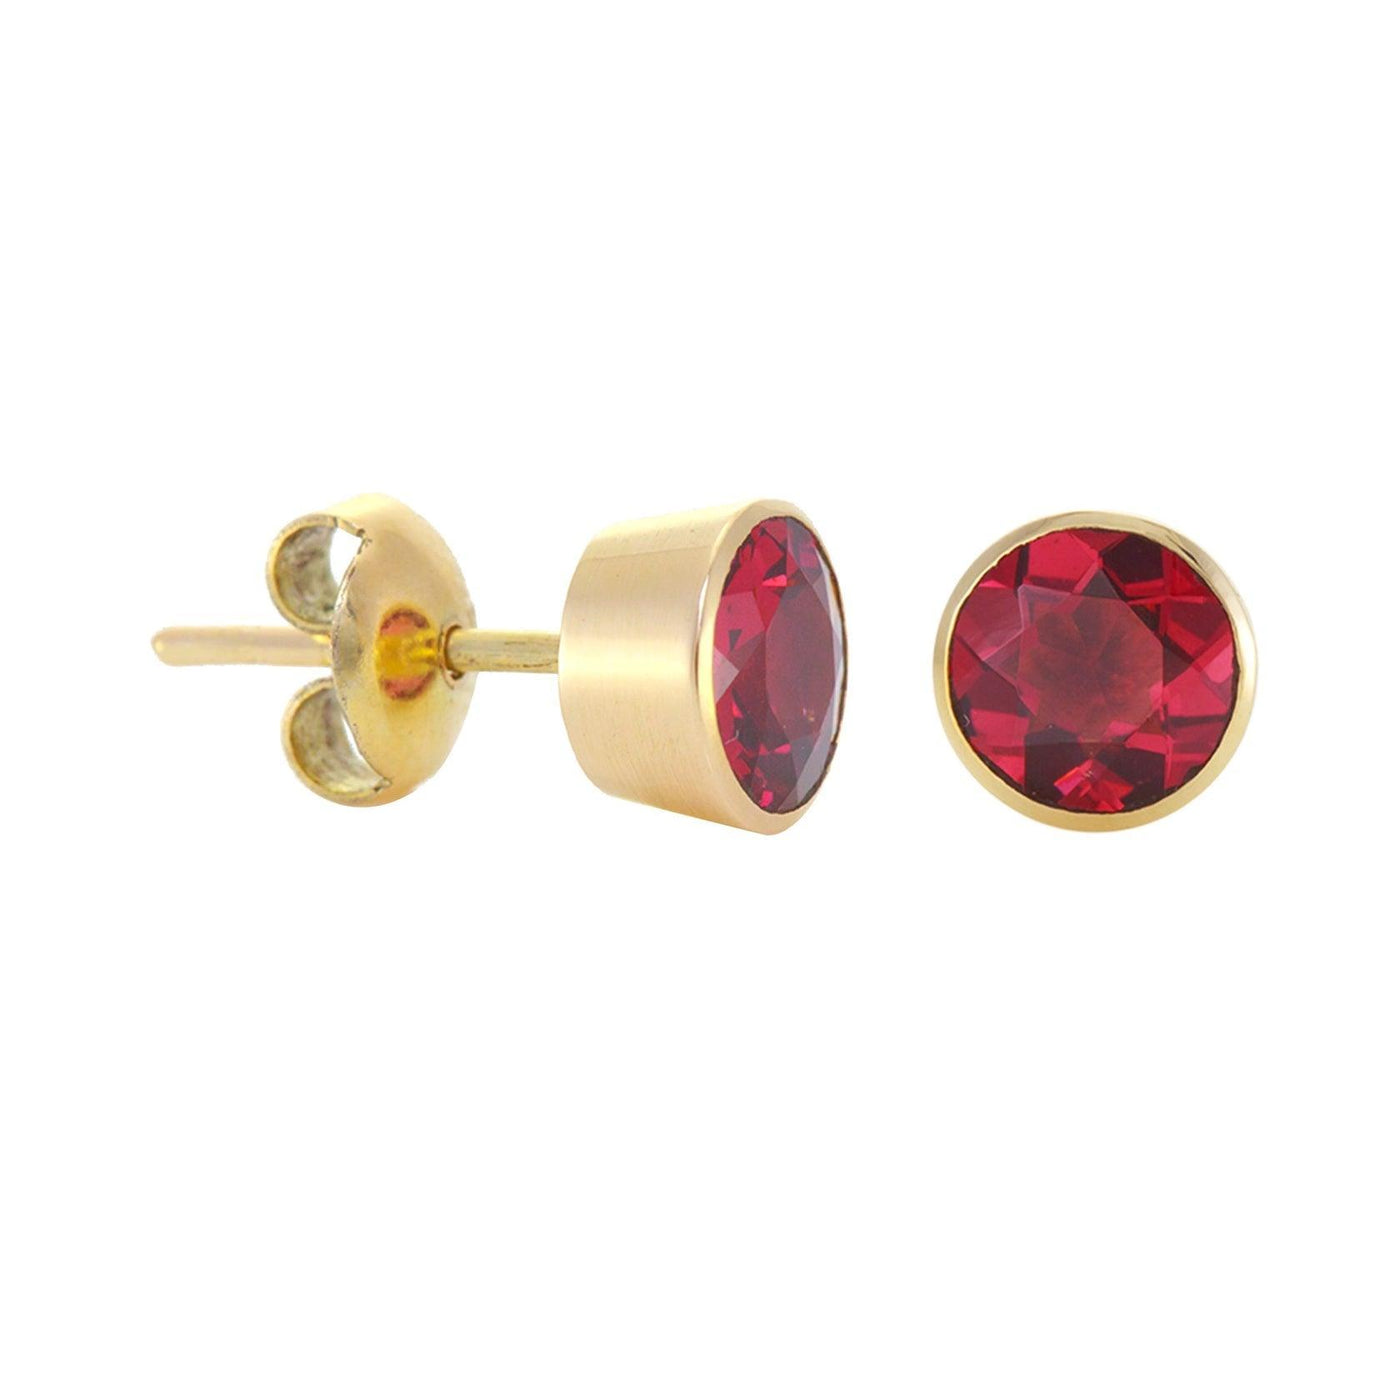 Simon Alexander 9ct Yellow Gold and Garnet Round Stud Earrings - Rococo Jewellery